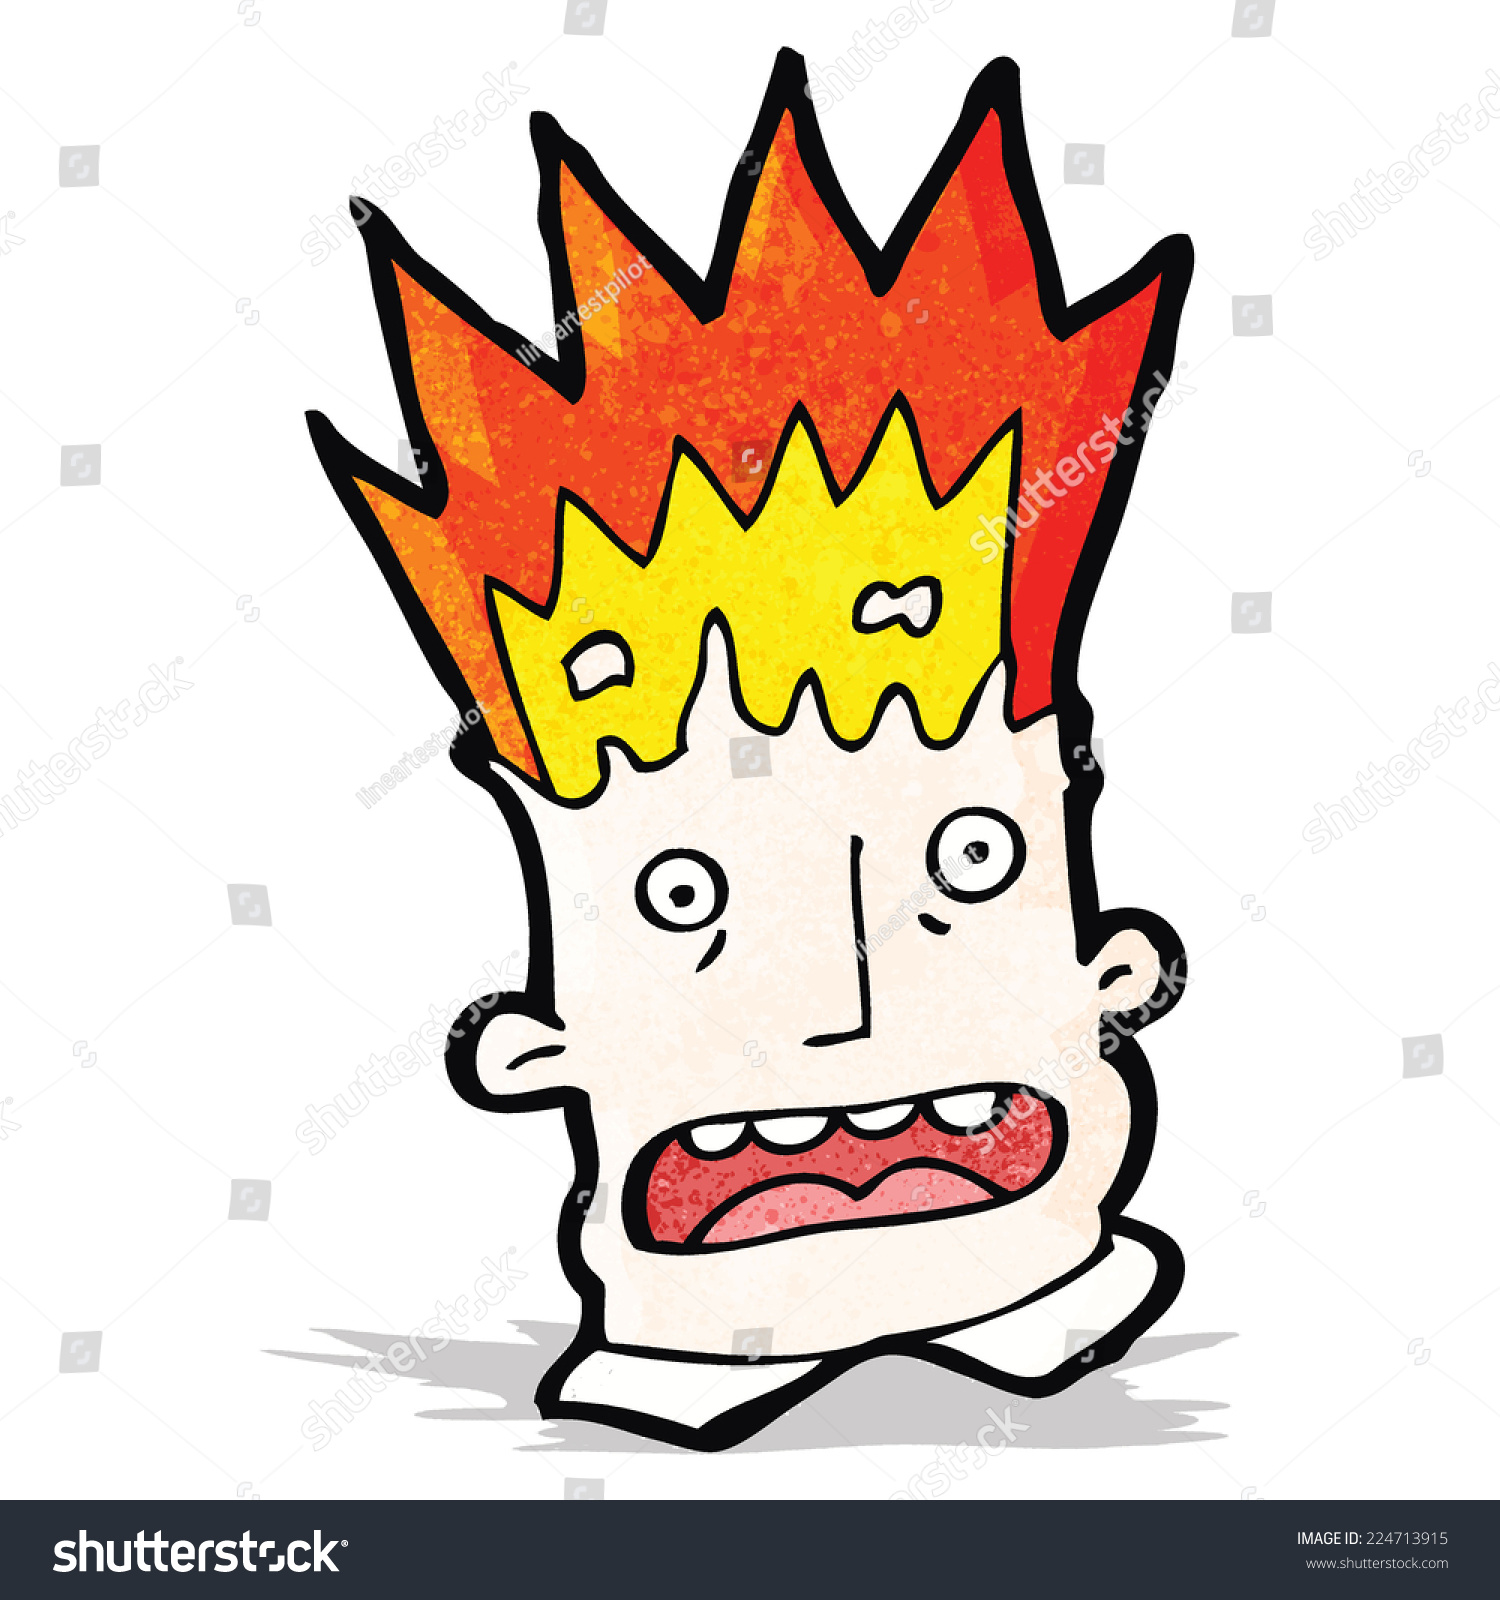 Cartoon Exploding Head Stock Vector (Royalty Free) 224713915 Shutterstock.